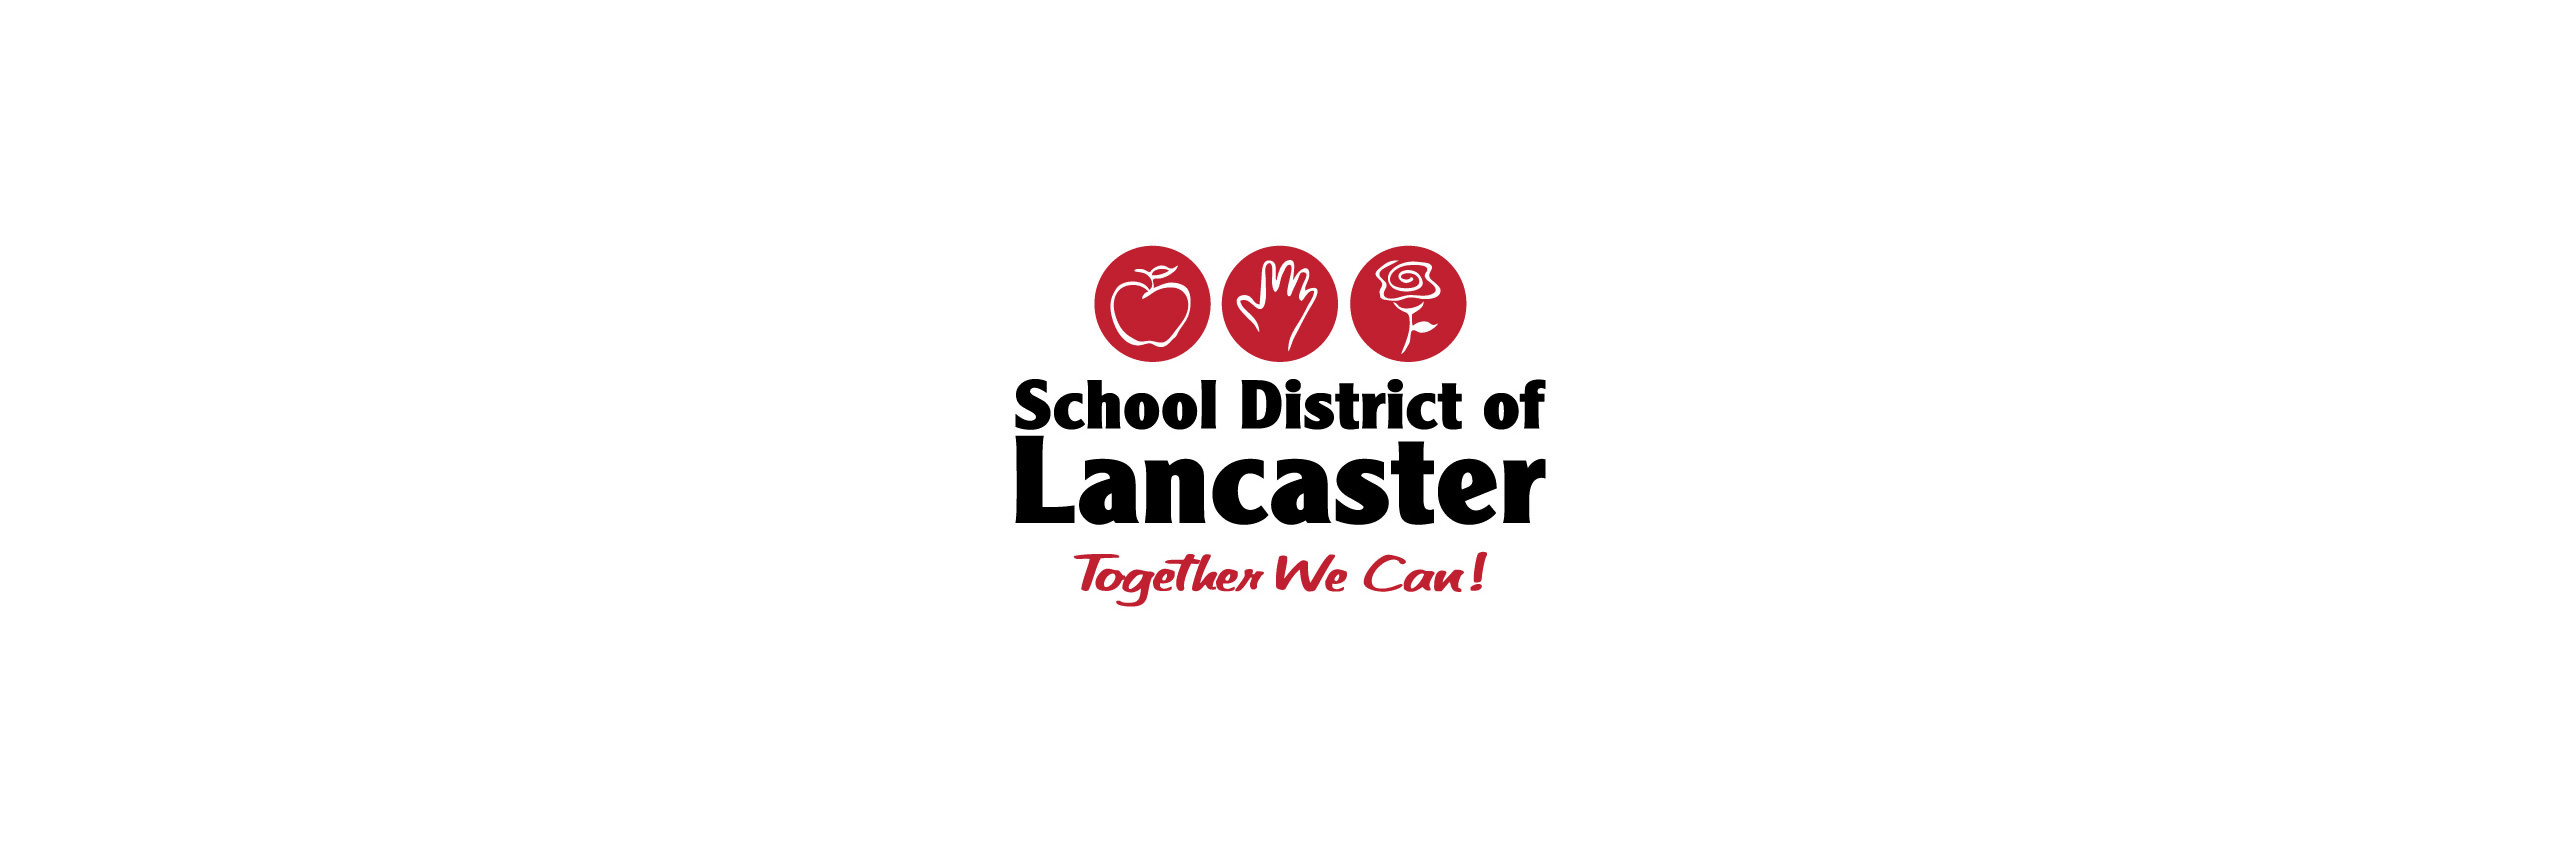 School District of Lancaster Events